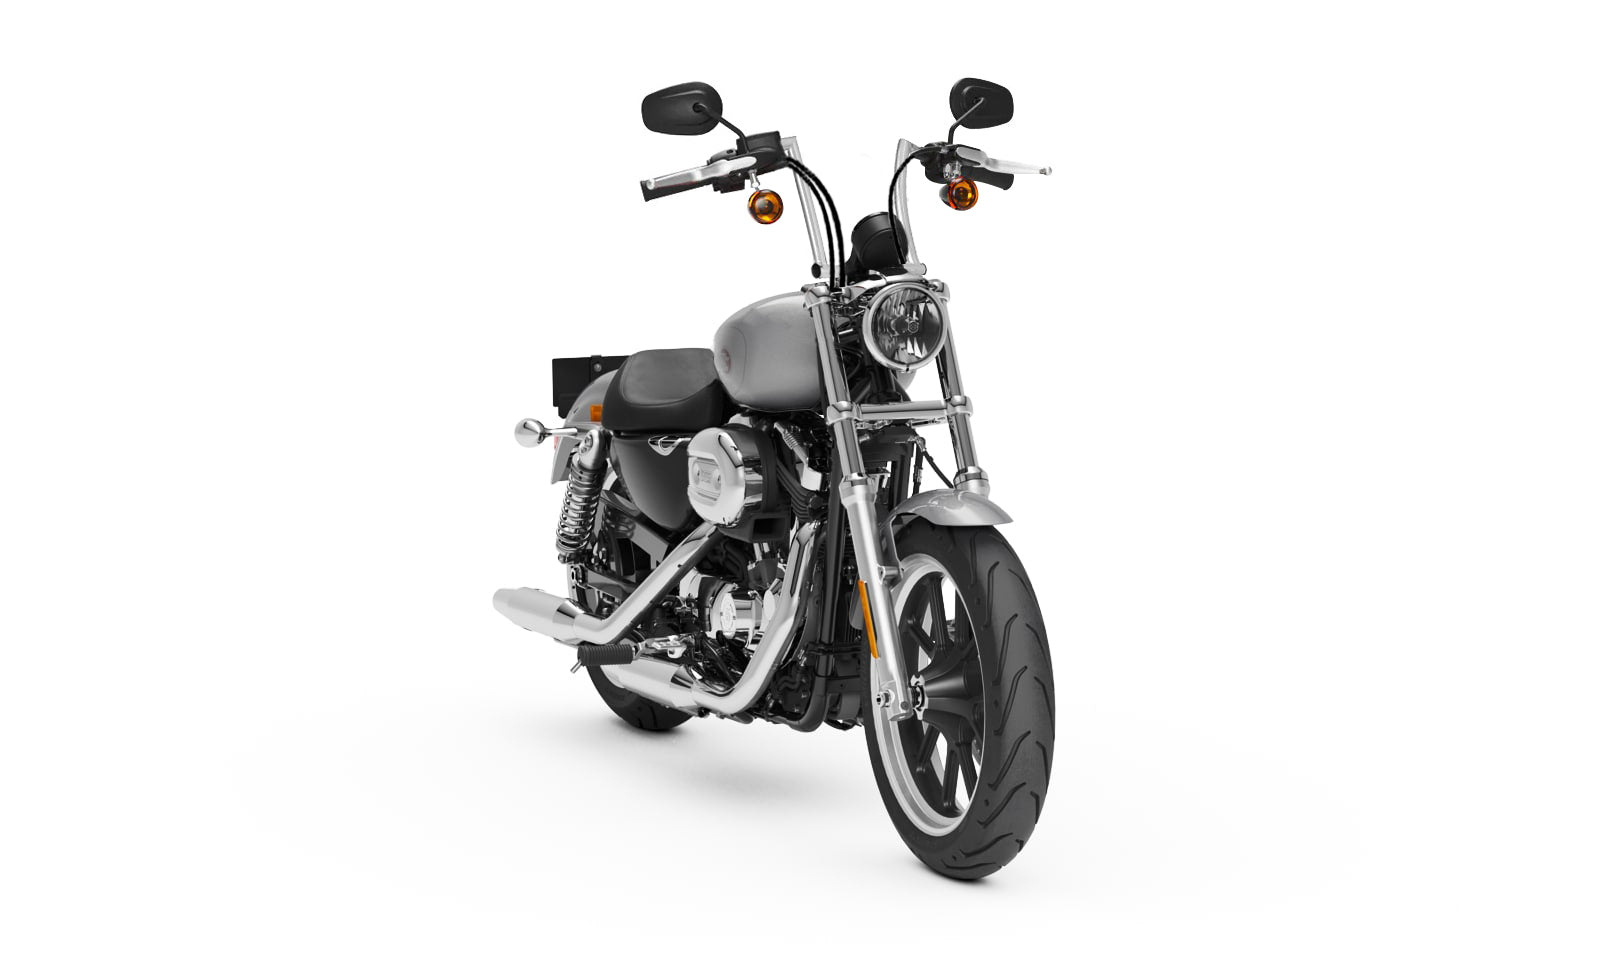 Viking Iron Born 9" Handlebar for Harley Sportster Superlow Chrome Bag on Bike View @expand